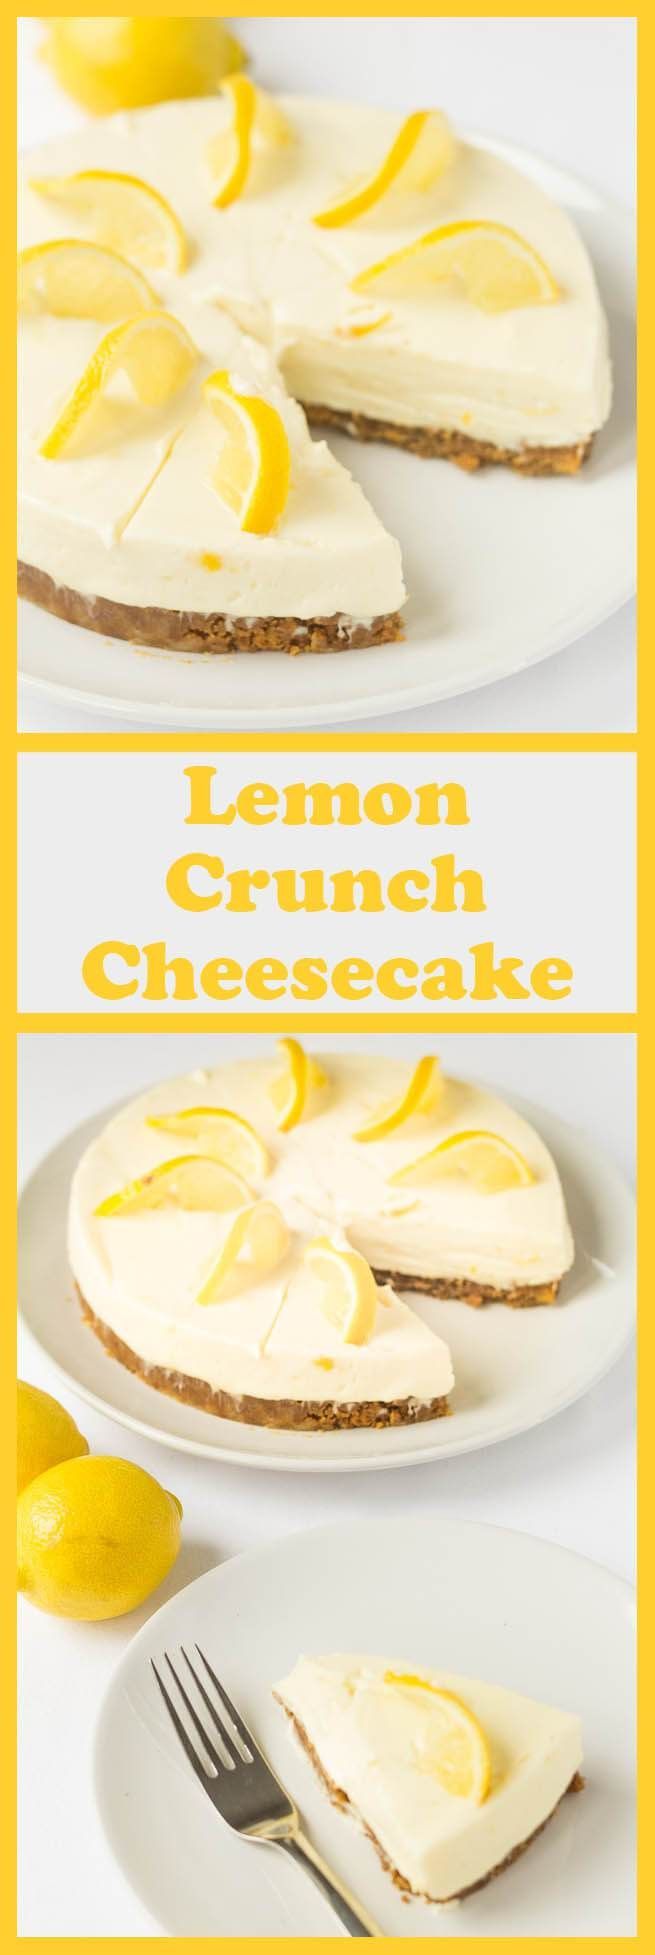 Lemon Crunch Cheesecake -   23 lemon cheesecake recipes ideas